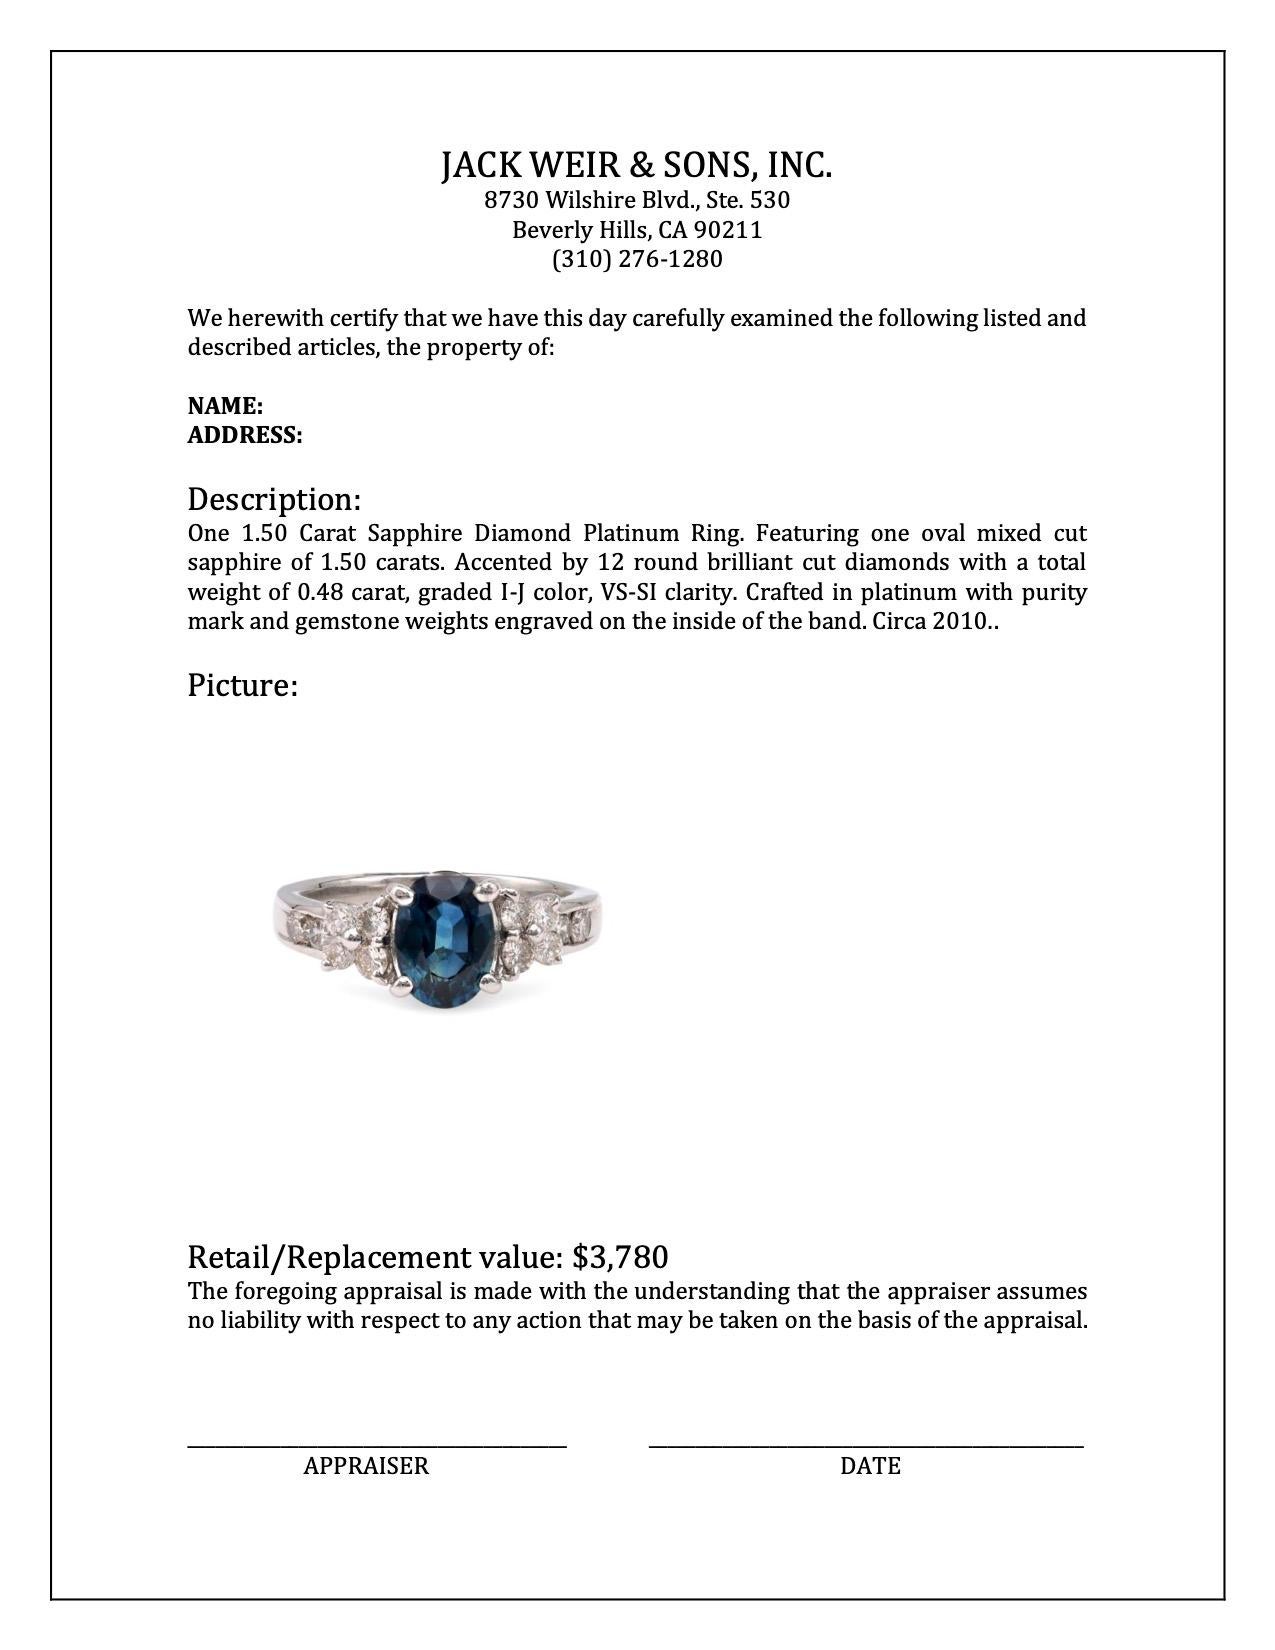 Women's or Men's 1.50 Carat Sapphire Diamond Platinum Ring For Sale